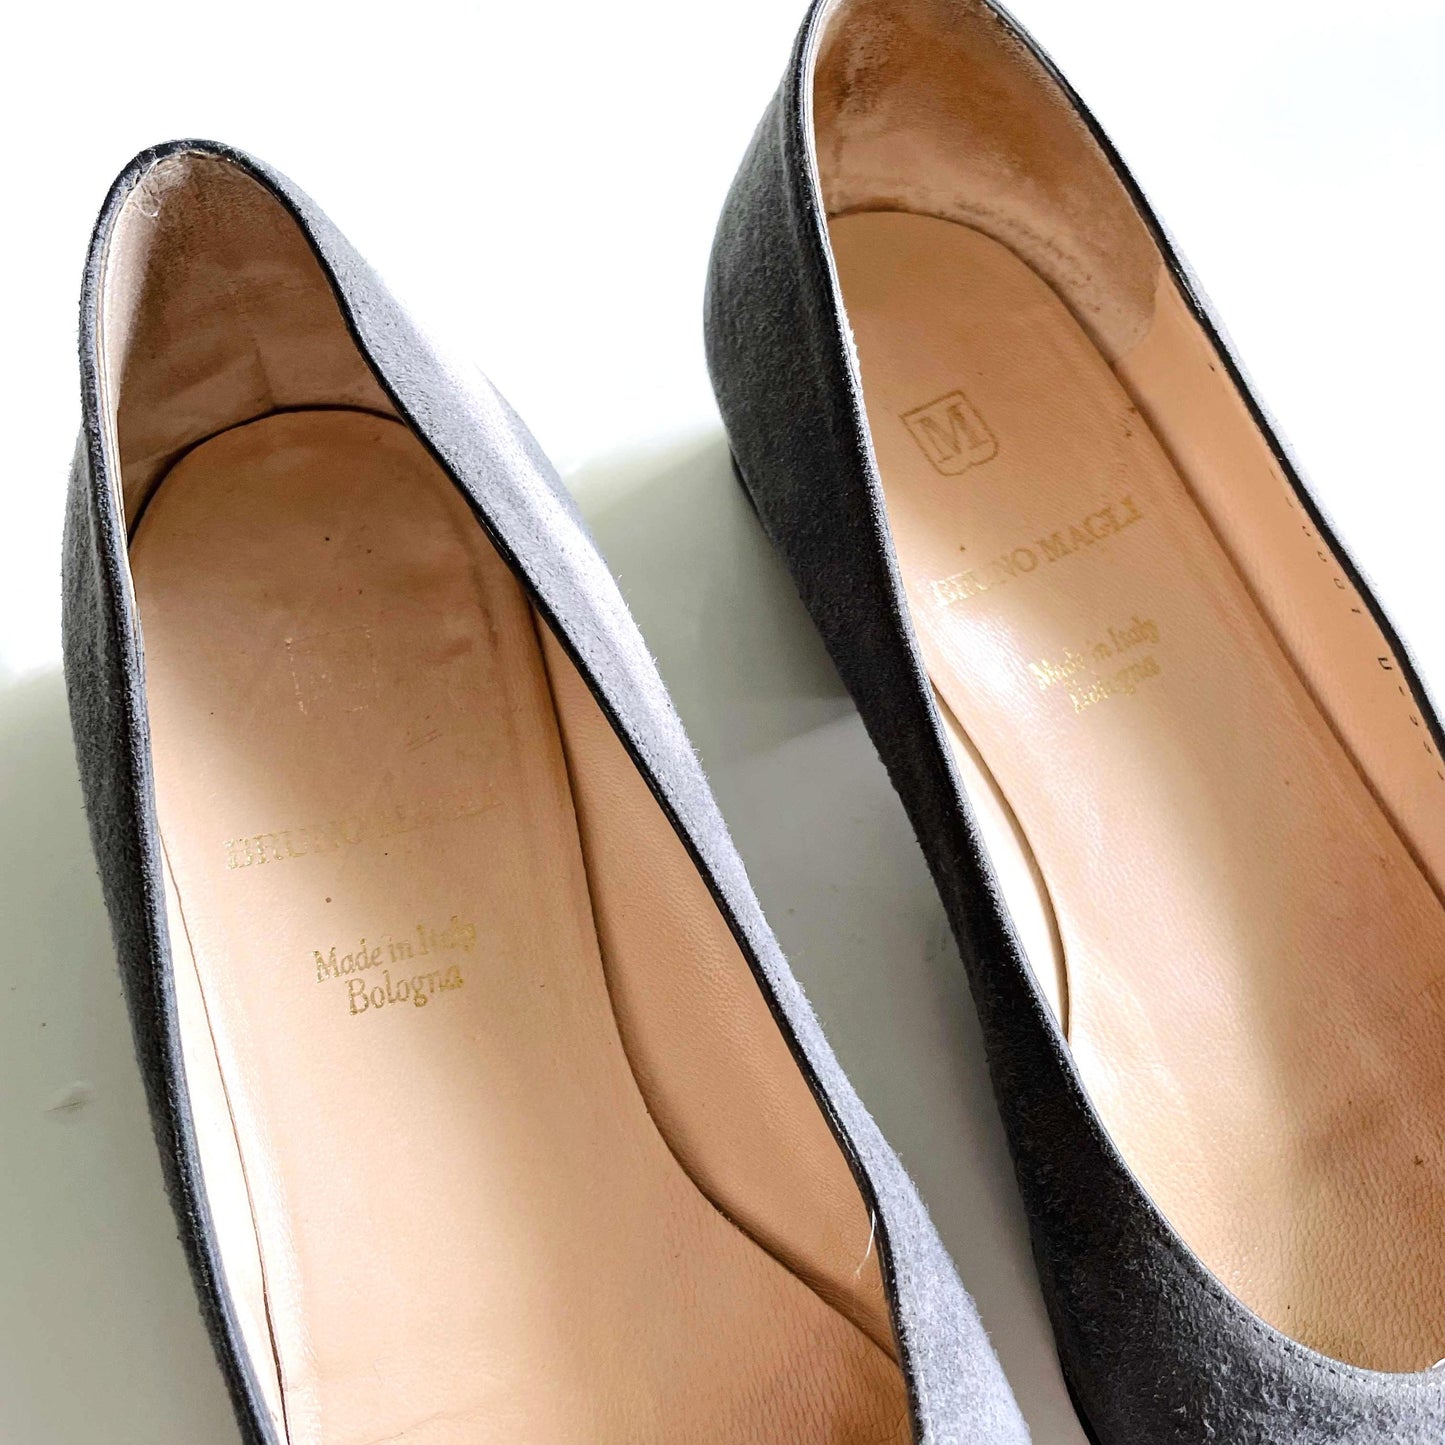 bruno magli suede day heel with metal art heels - size 37